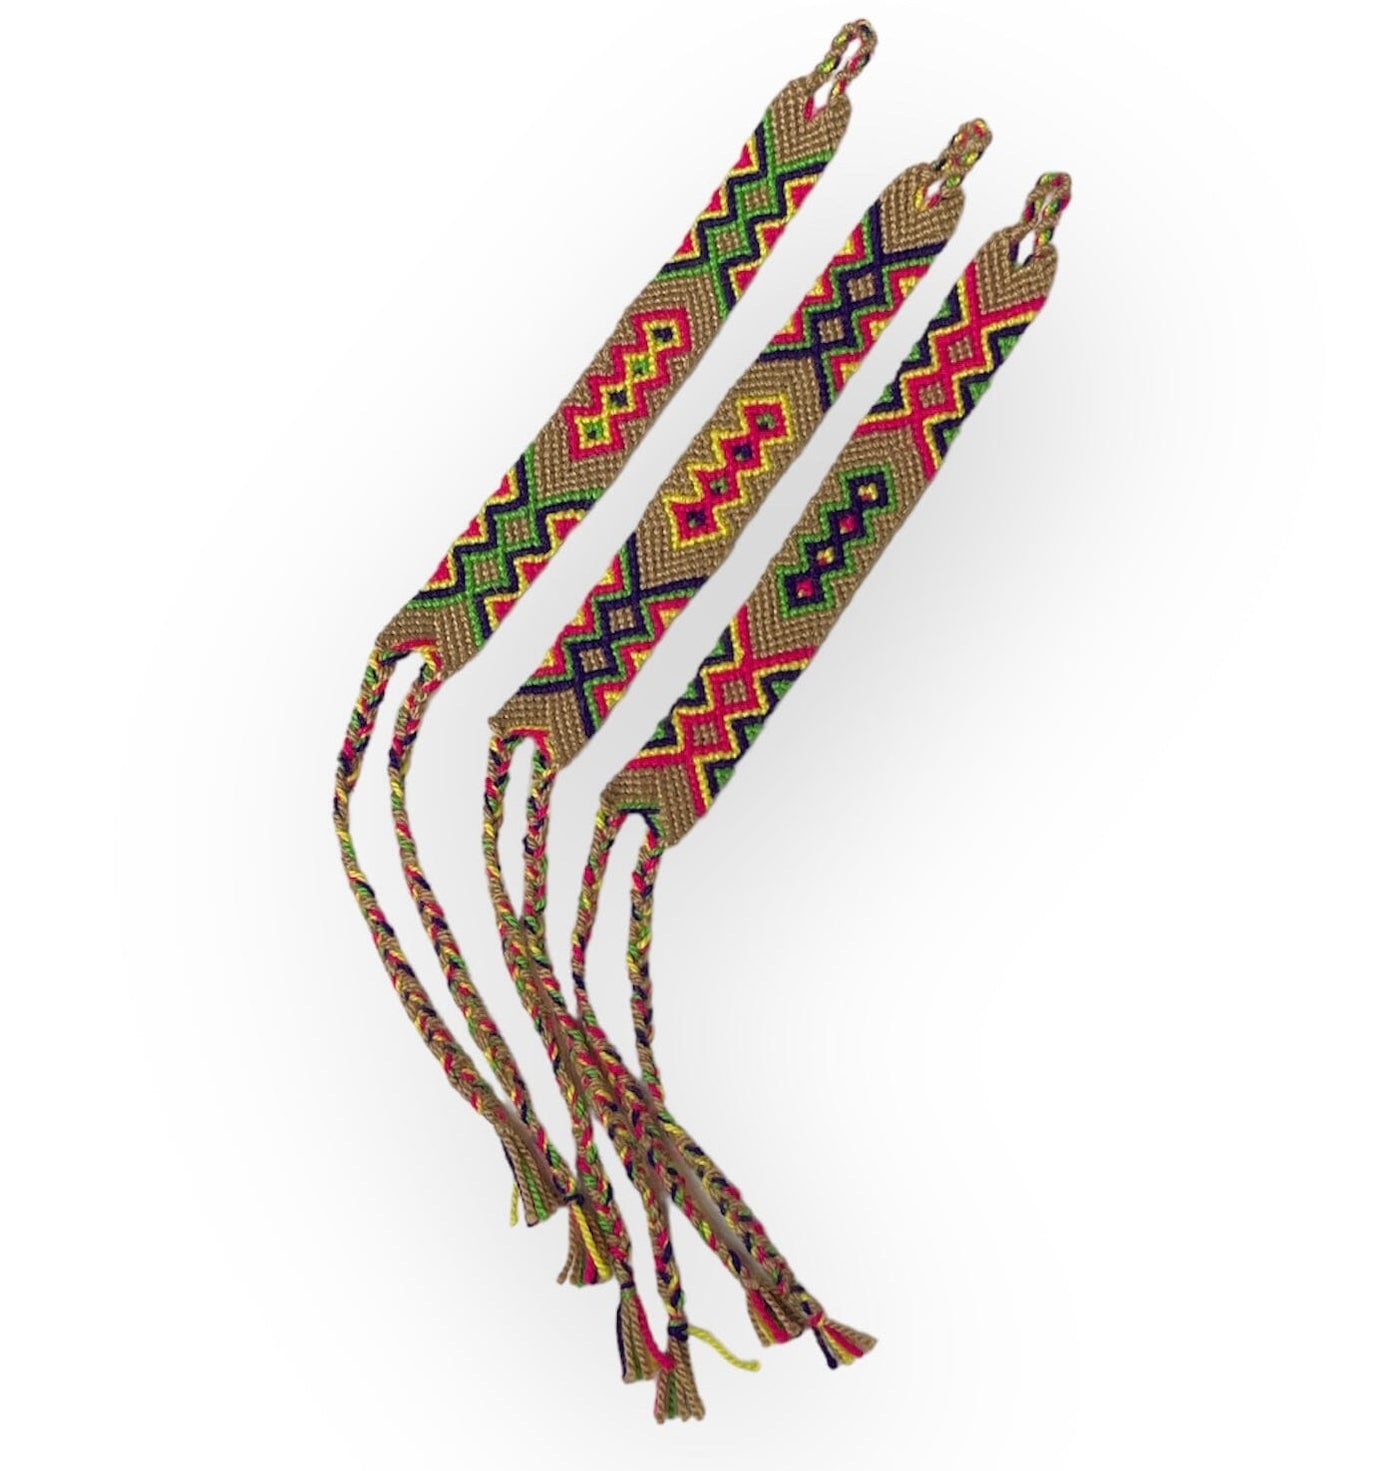 Neon Beige Neutral Tones Friendship Bracelets | Woven wrist bands | Macrame Bracelet |  Colorful 4U